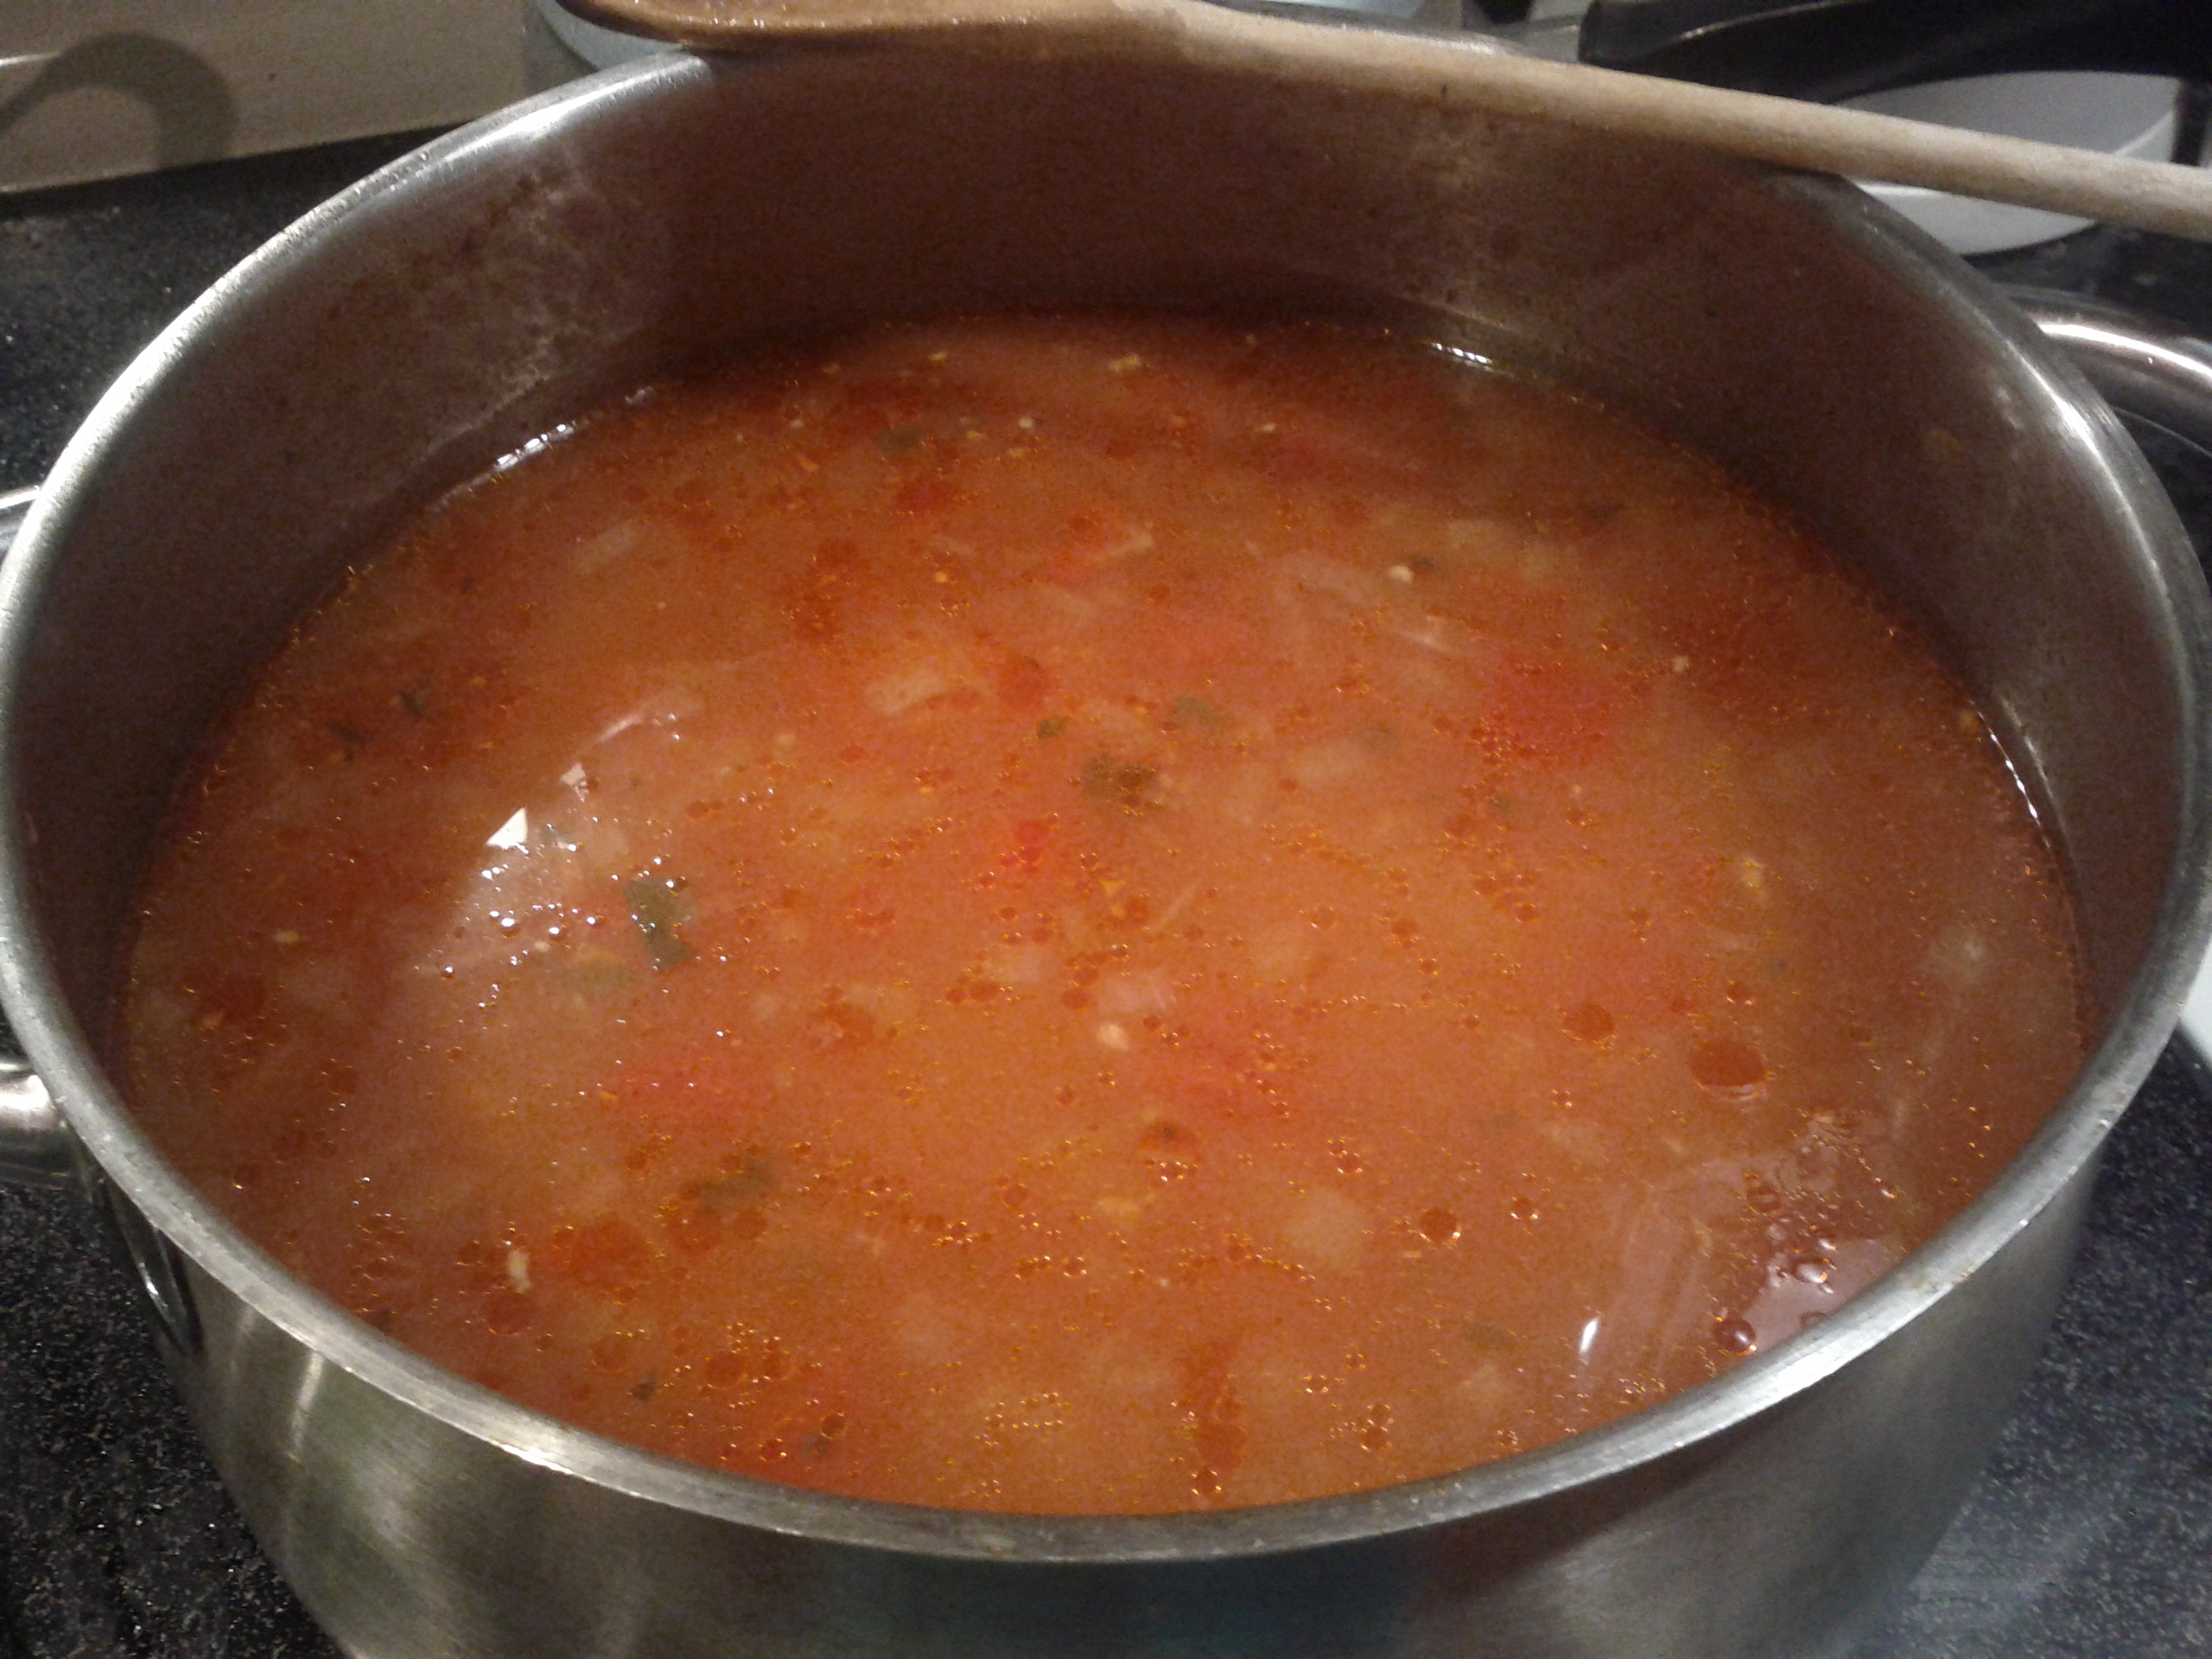 Суп харчо сколько риса. Фото харчо в кастрюле. Рецепт харчо из говядины классический с рисом с фото пошагово.